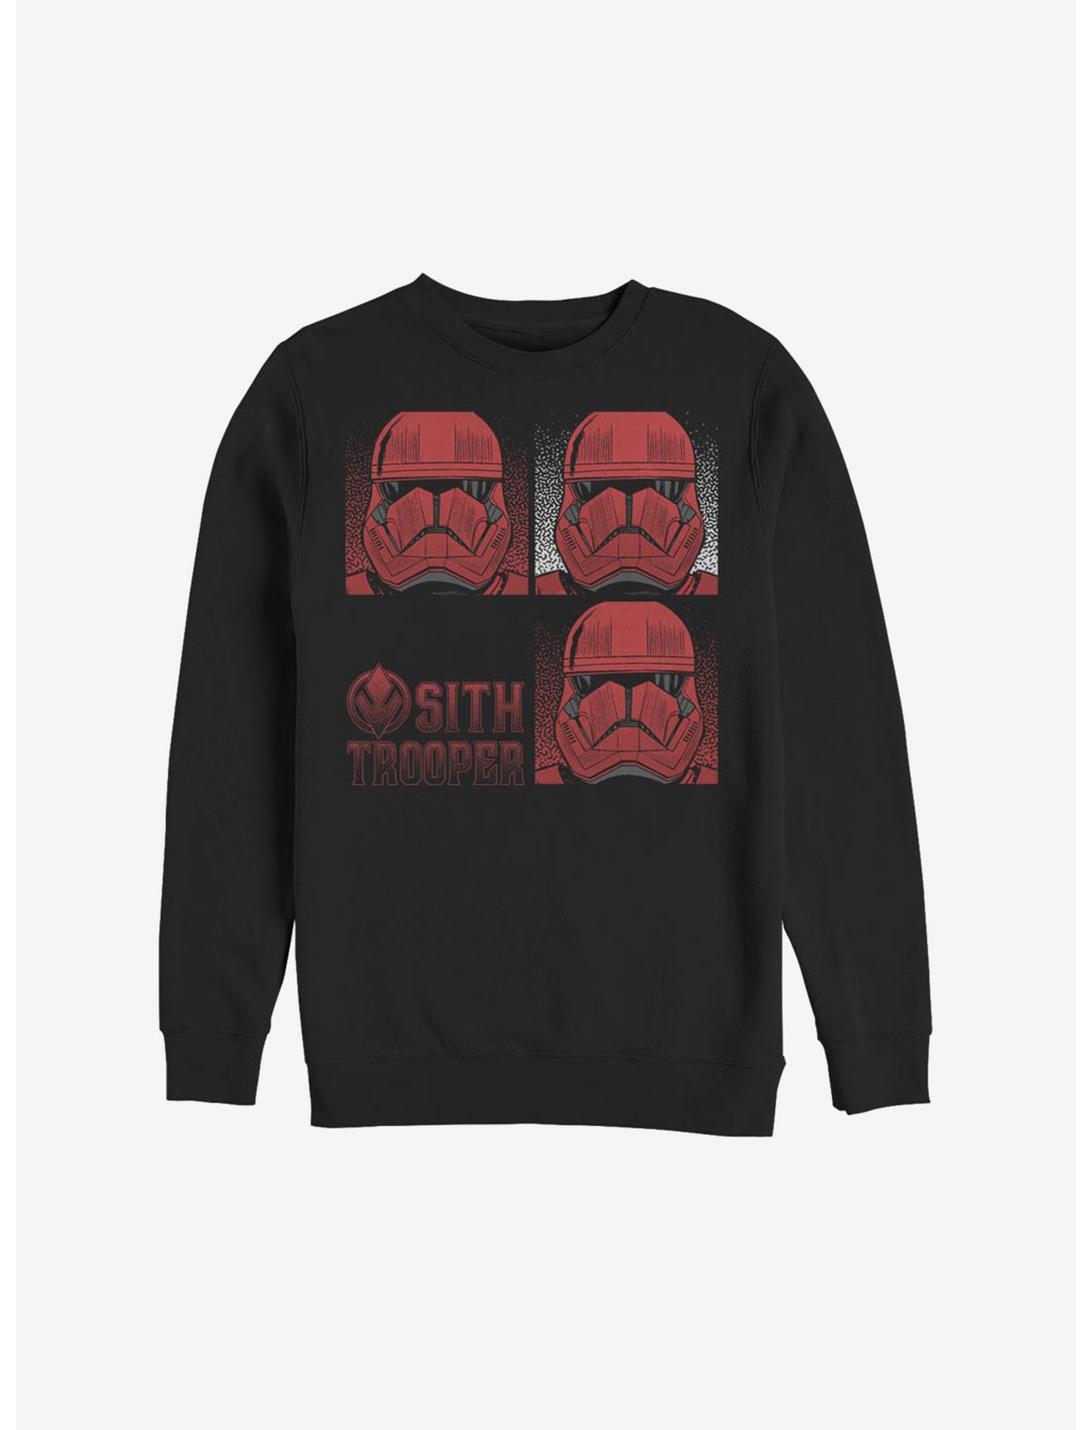 Star Wars Episode IX The Rise Of Skywalker Sith Trooper Sweatshirt, BLACK, hi-res